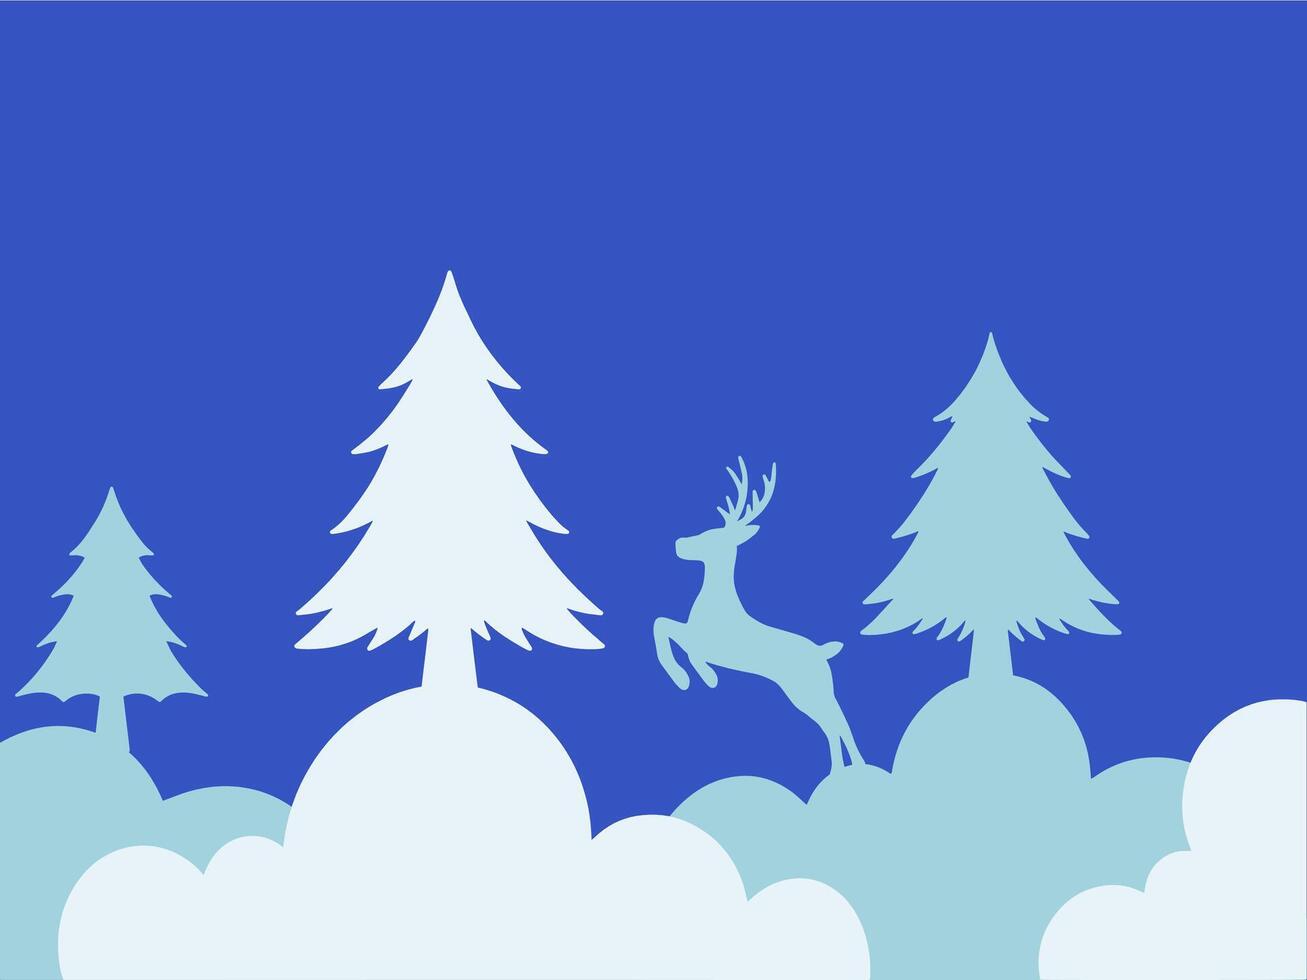 Christmas Tree Snow Background Illustration vector